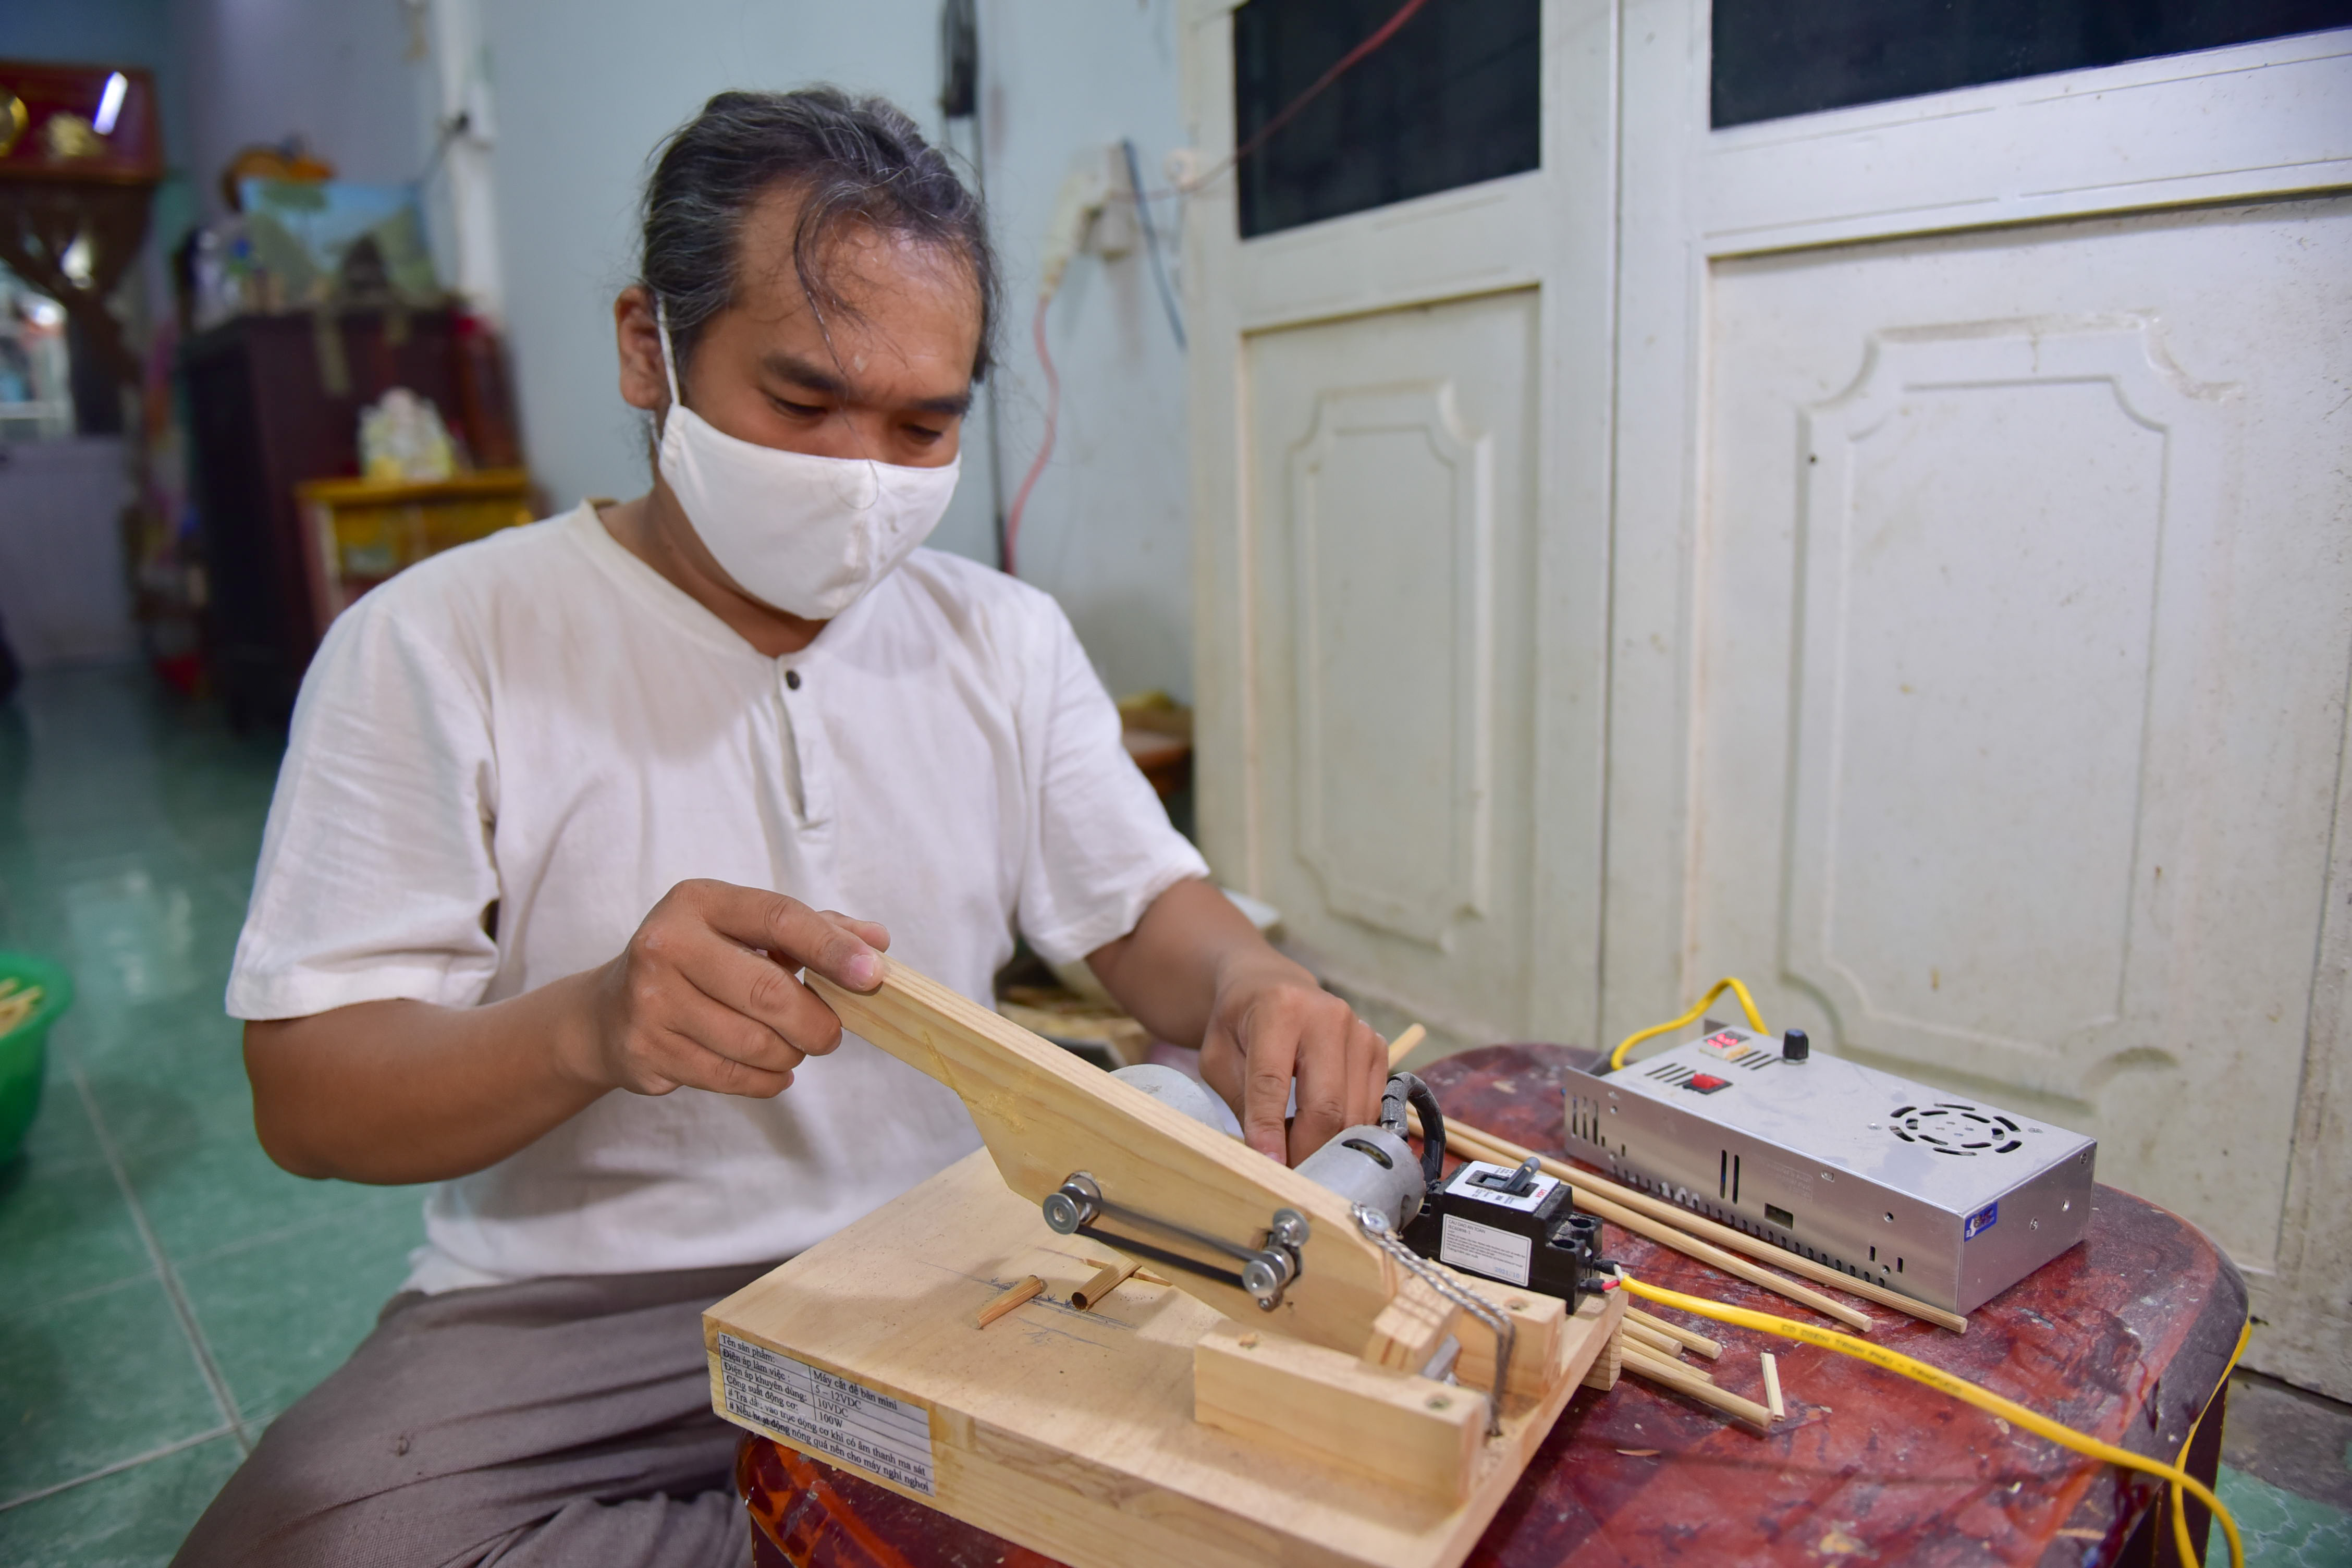 Phan cuts bamboo chopsticks to make pen tips. Photo: Ngoc Phuong / Tuoi Tre News